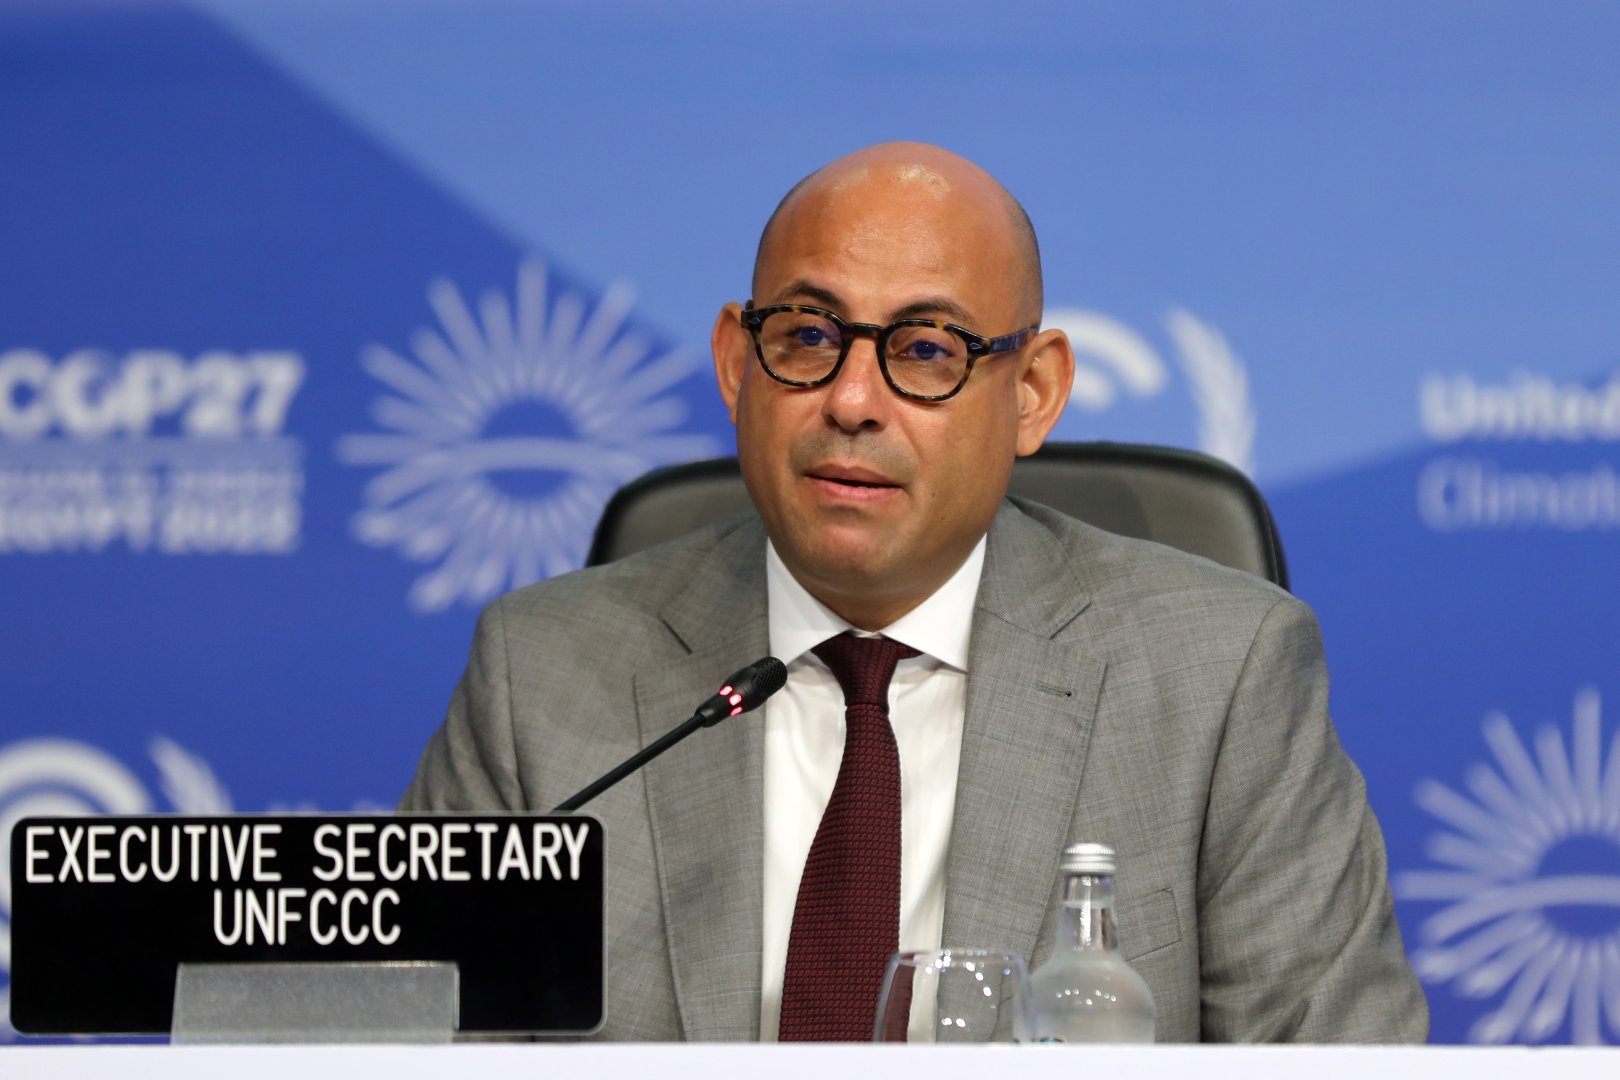 COP29 should make bold decisions on emission reduction commitments - UNFCC executive secretary